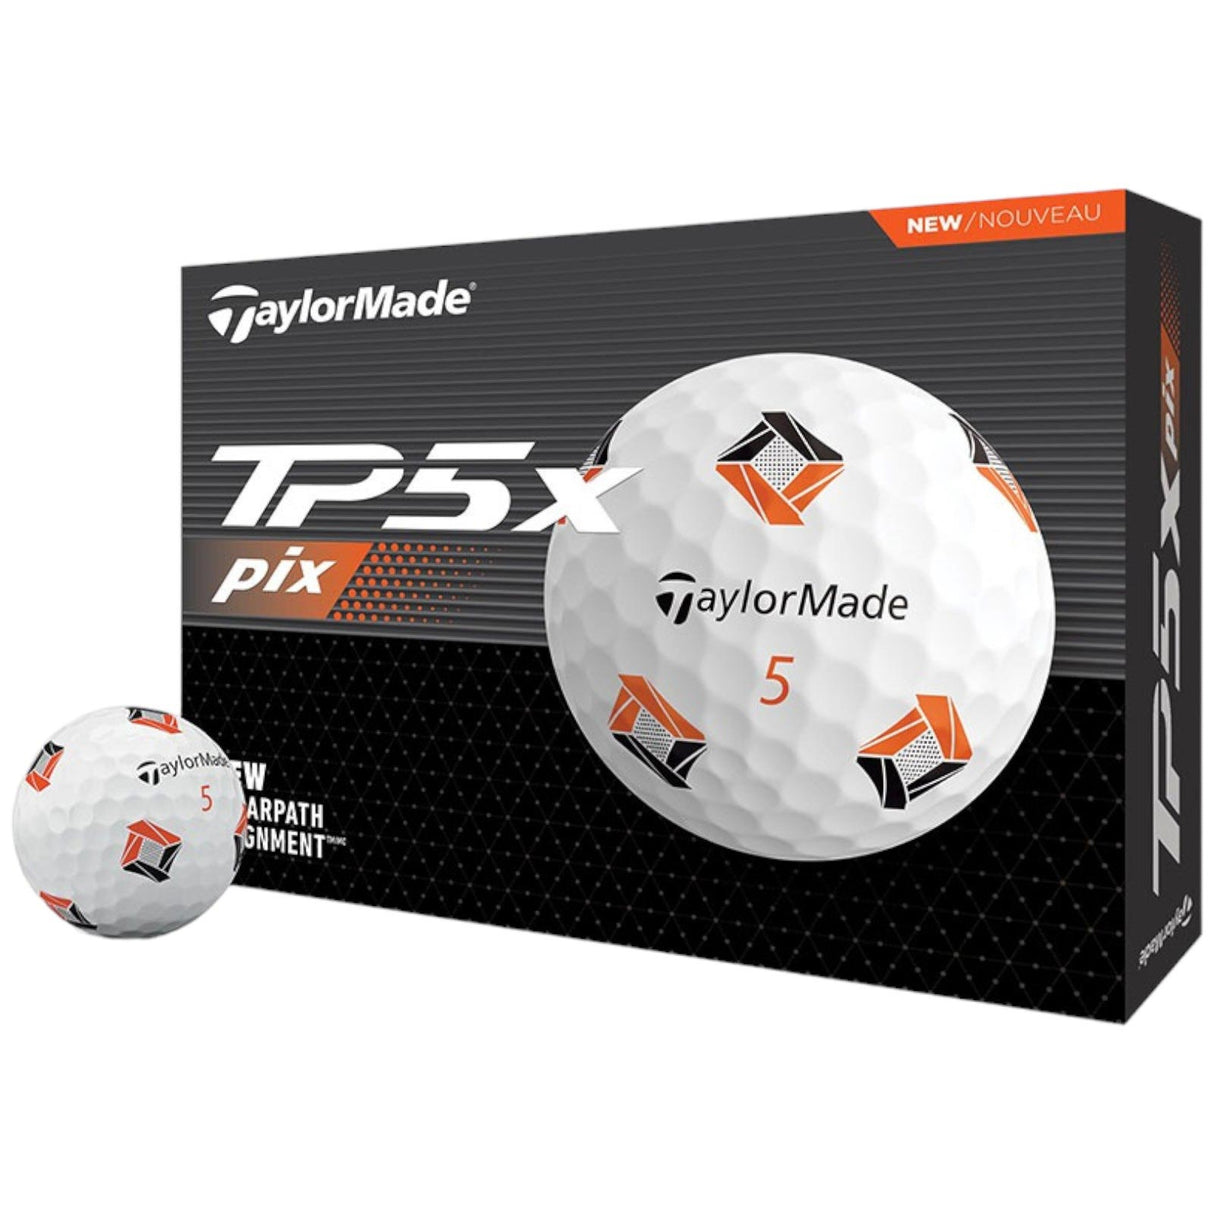 Taylormade TP5X Pix 3.0 23 Golf Ball Wht